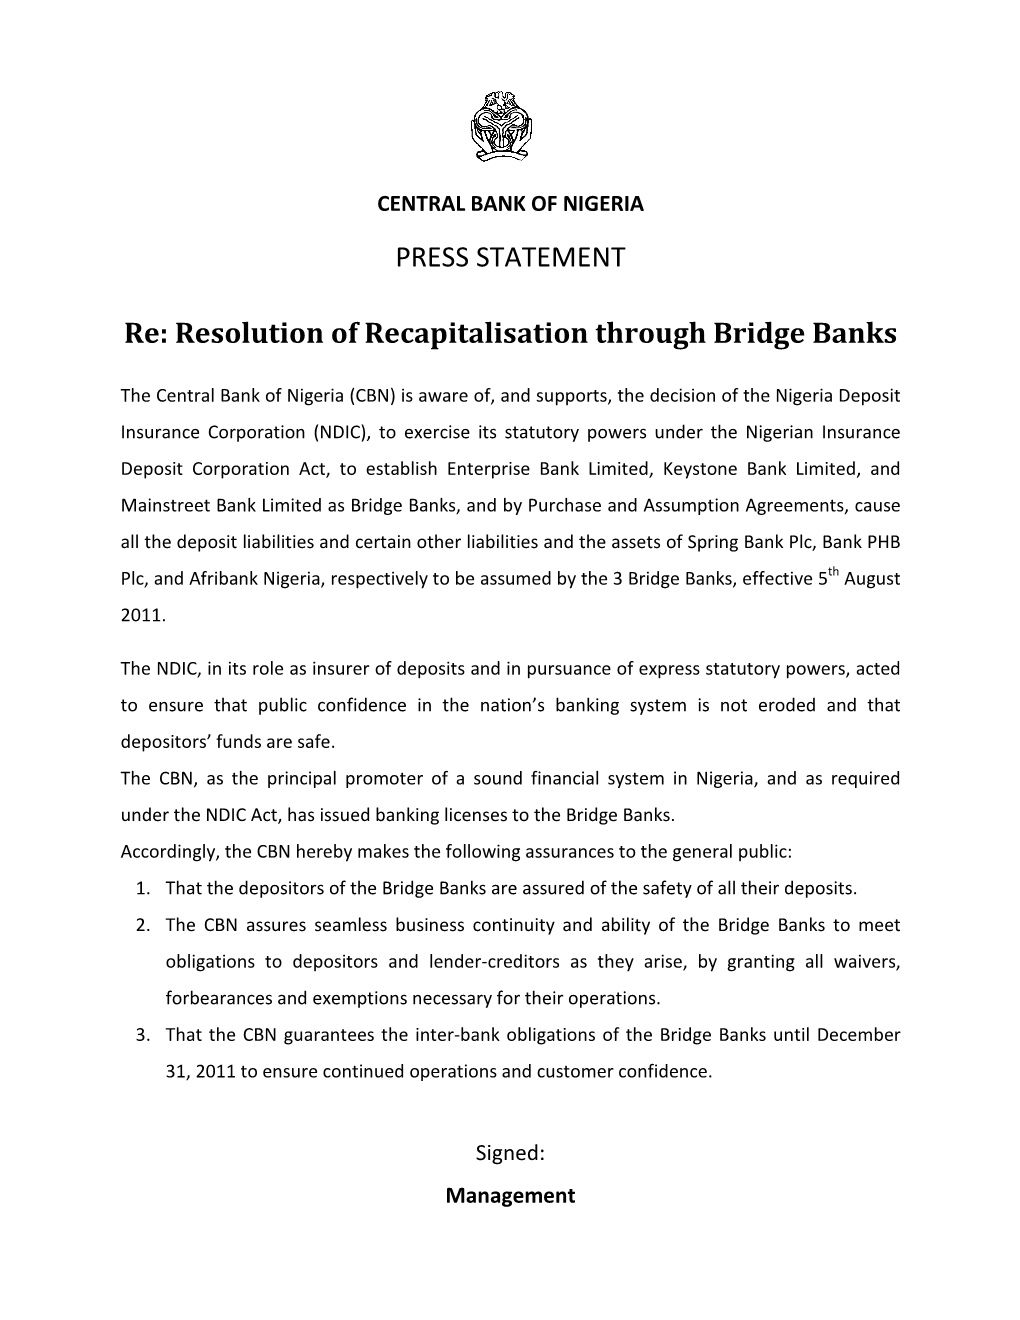 Resolution of Recapitalisation Through Bridge Banks